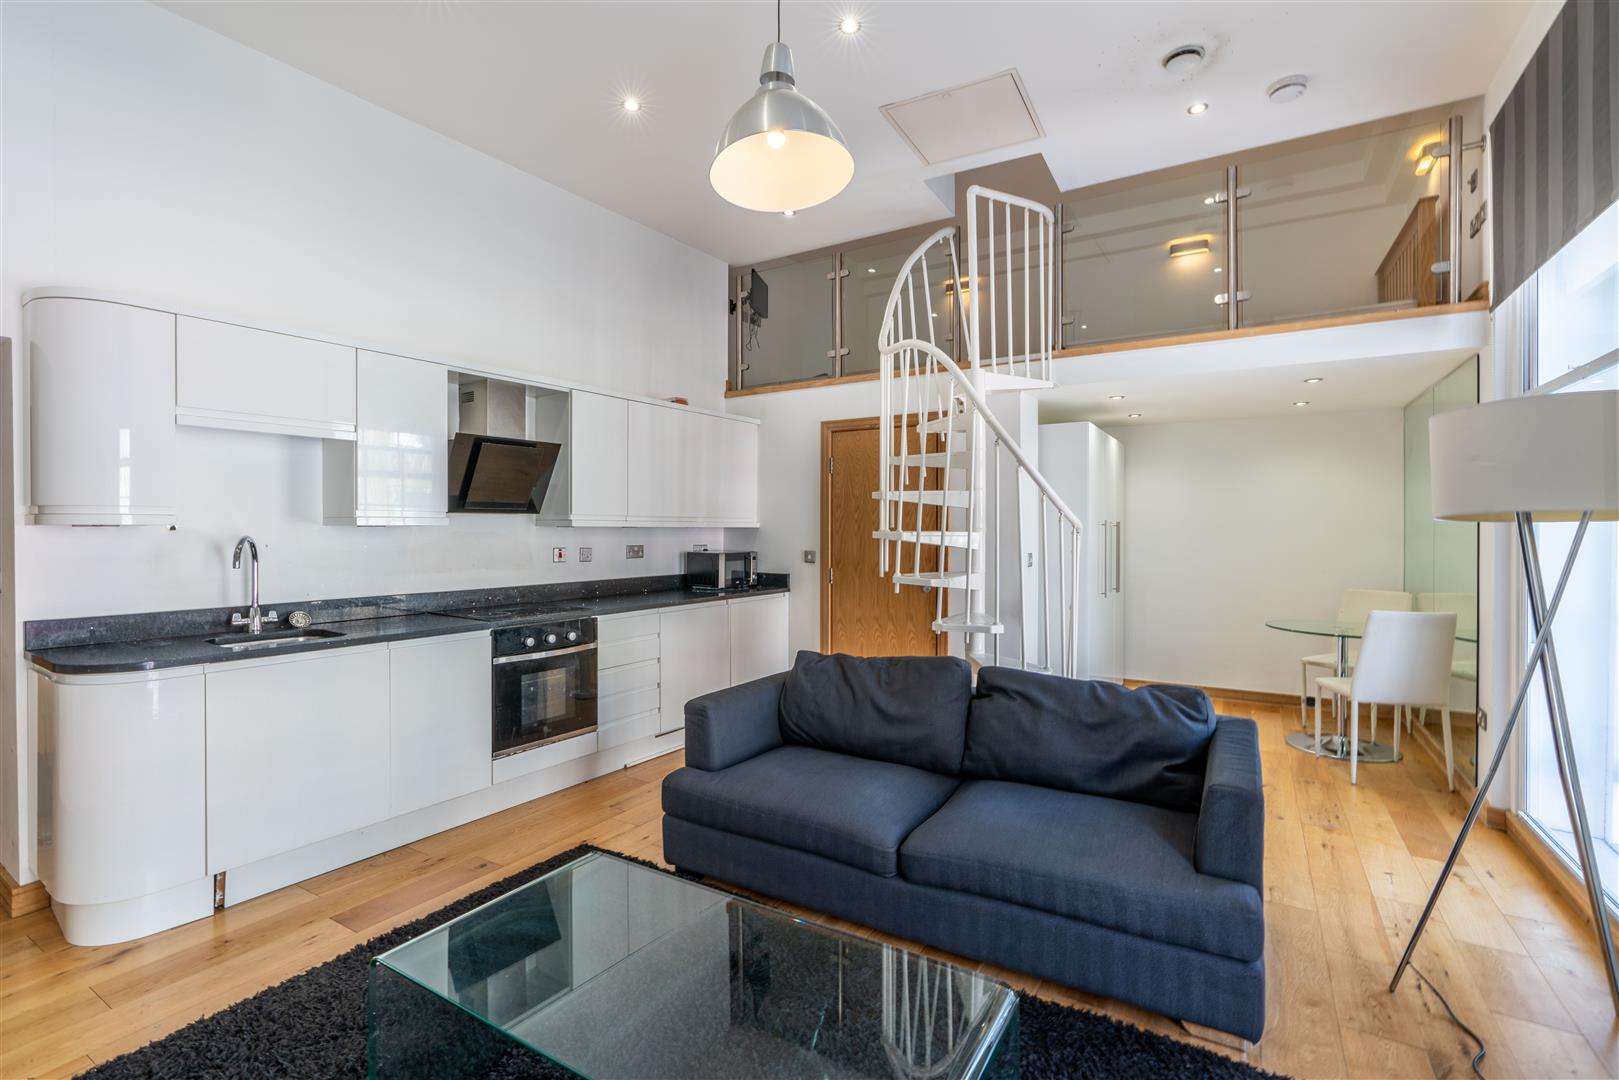 1 bed studio flat to rent in Grainger Street, City Centre - Property Image 1